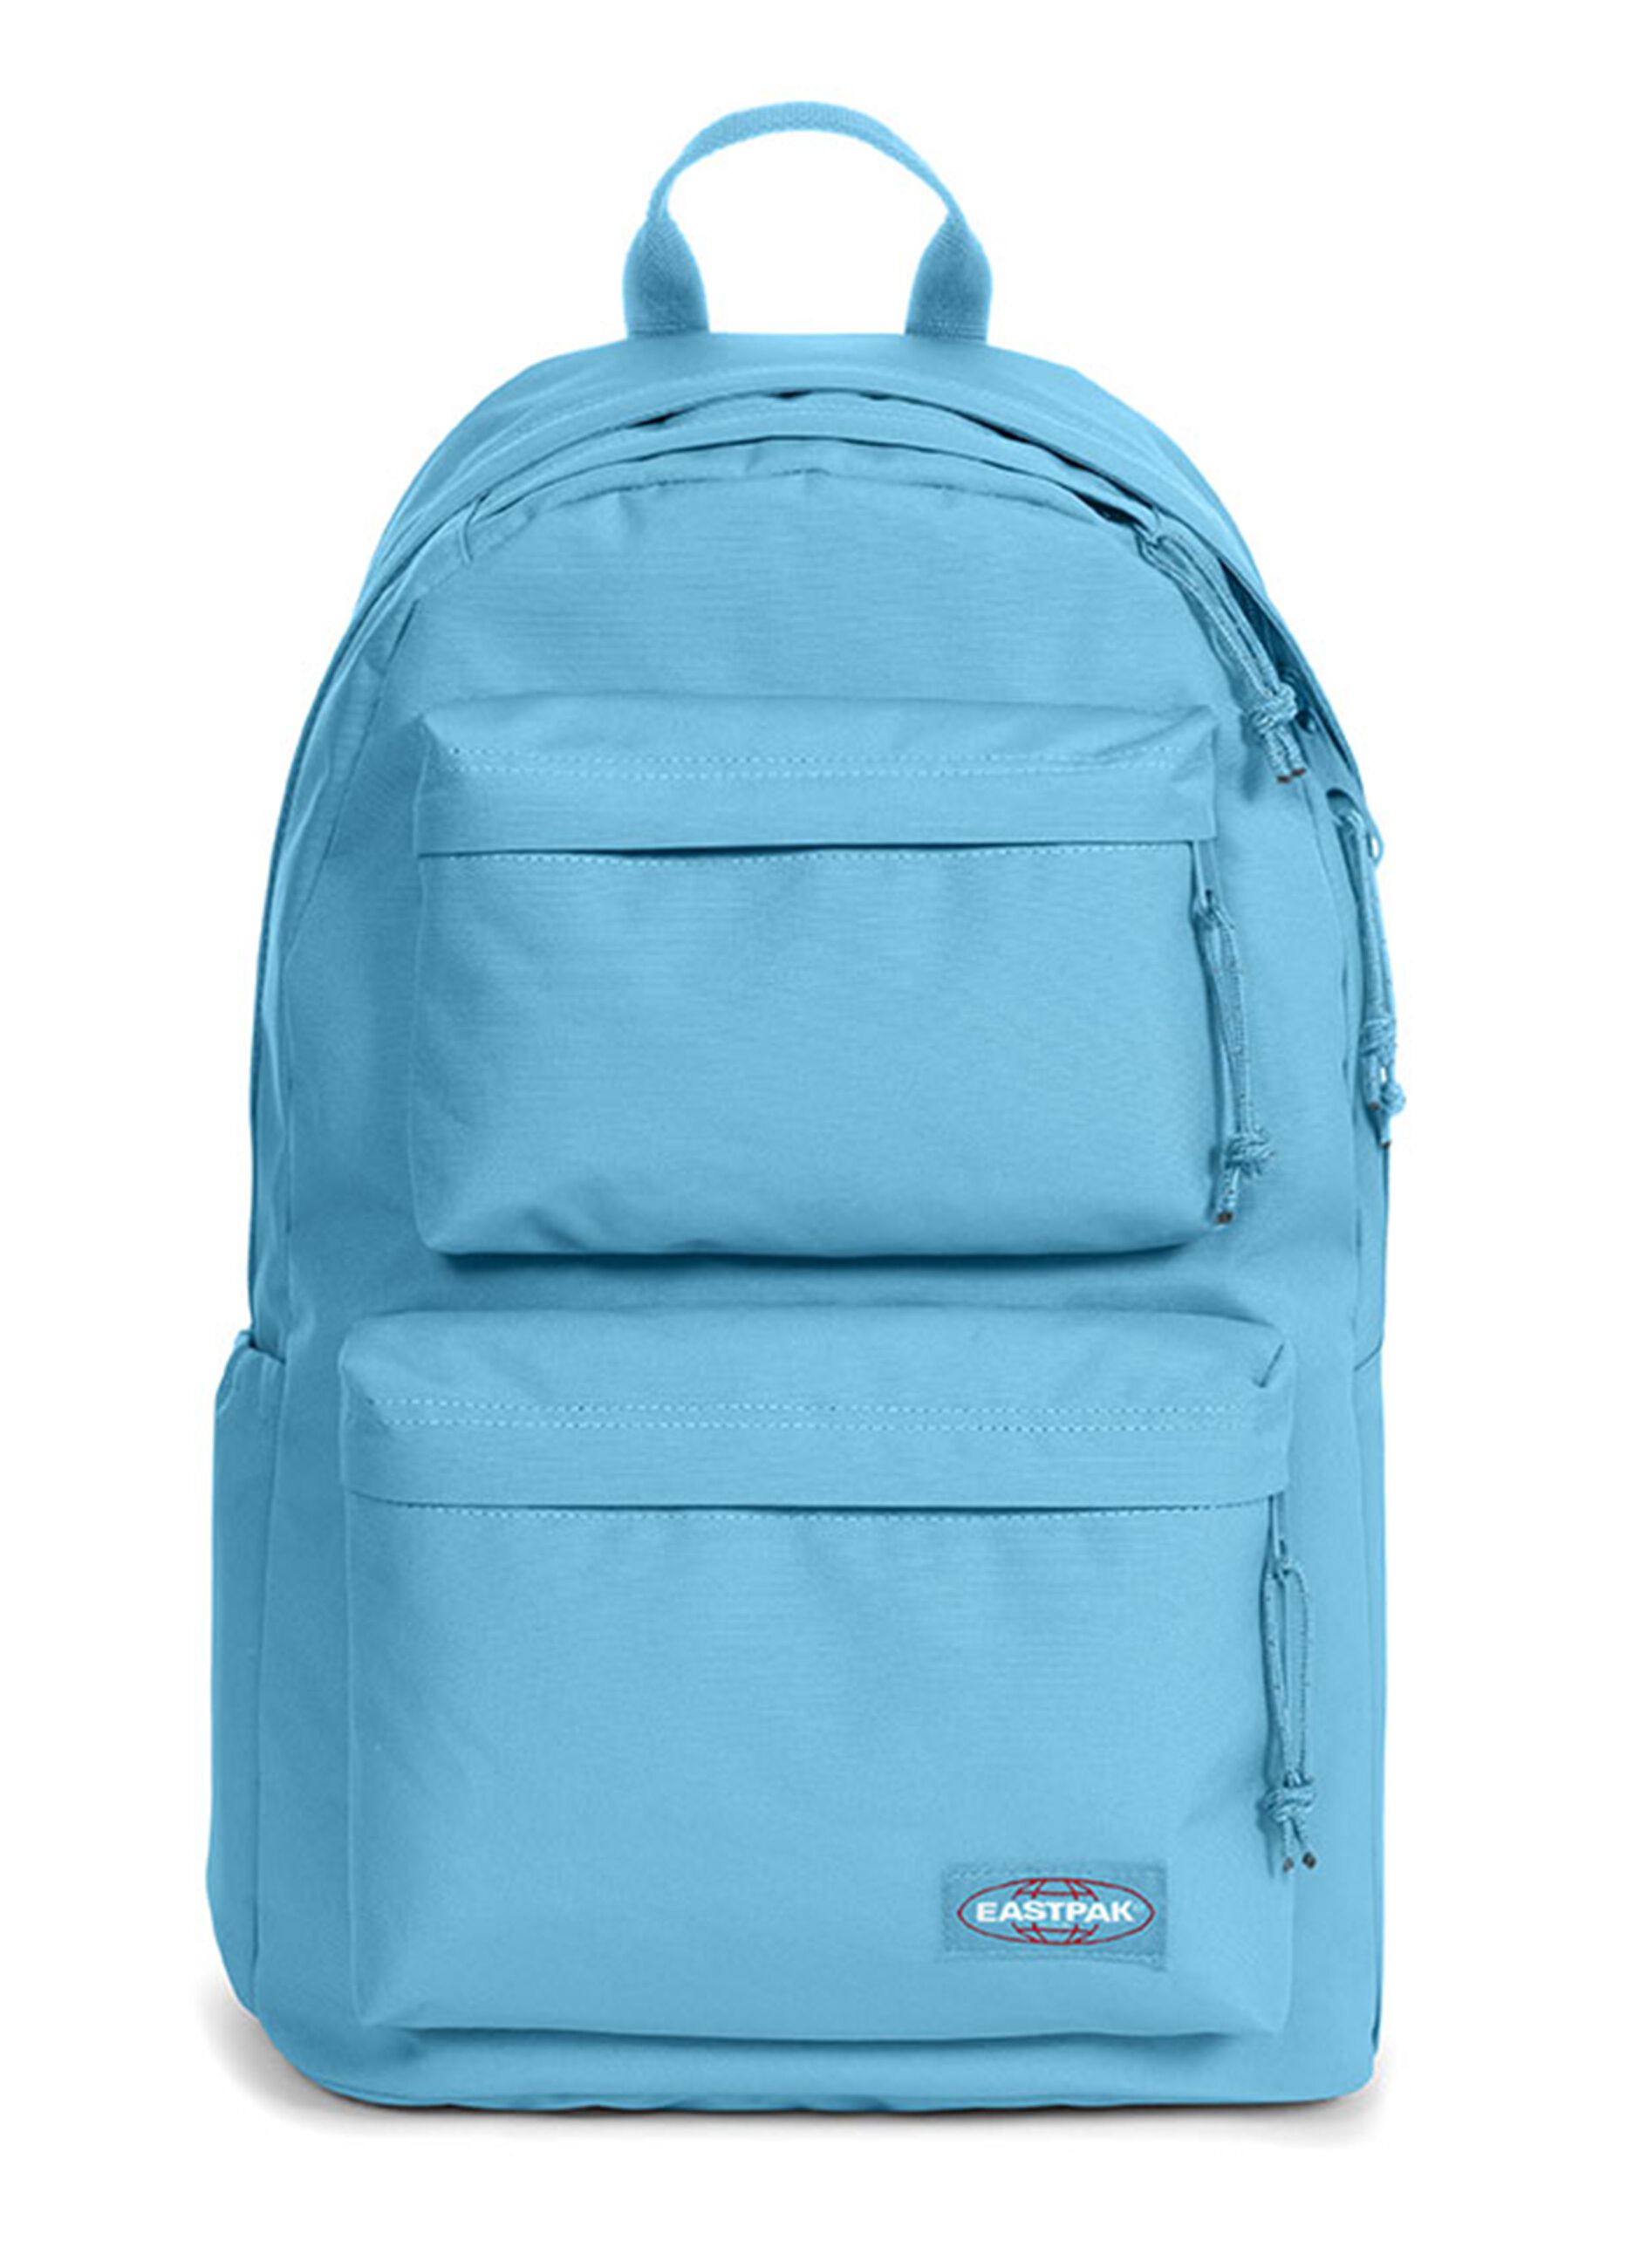 Eastpak Padded Double backpack